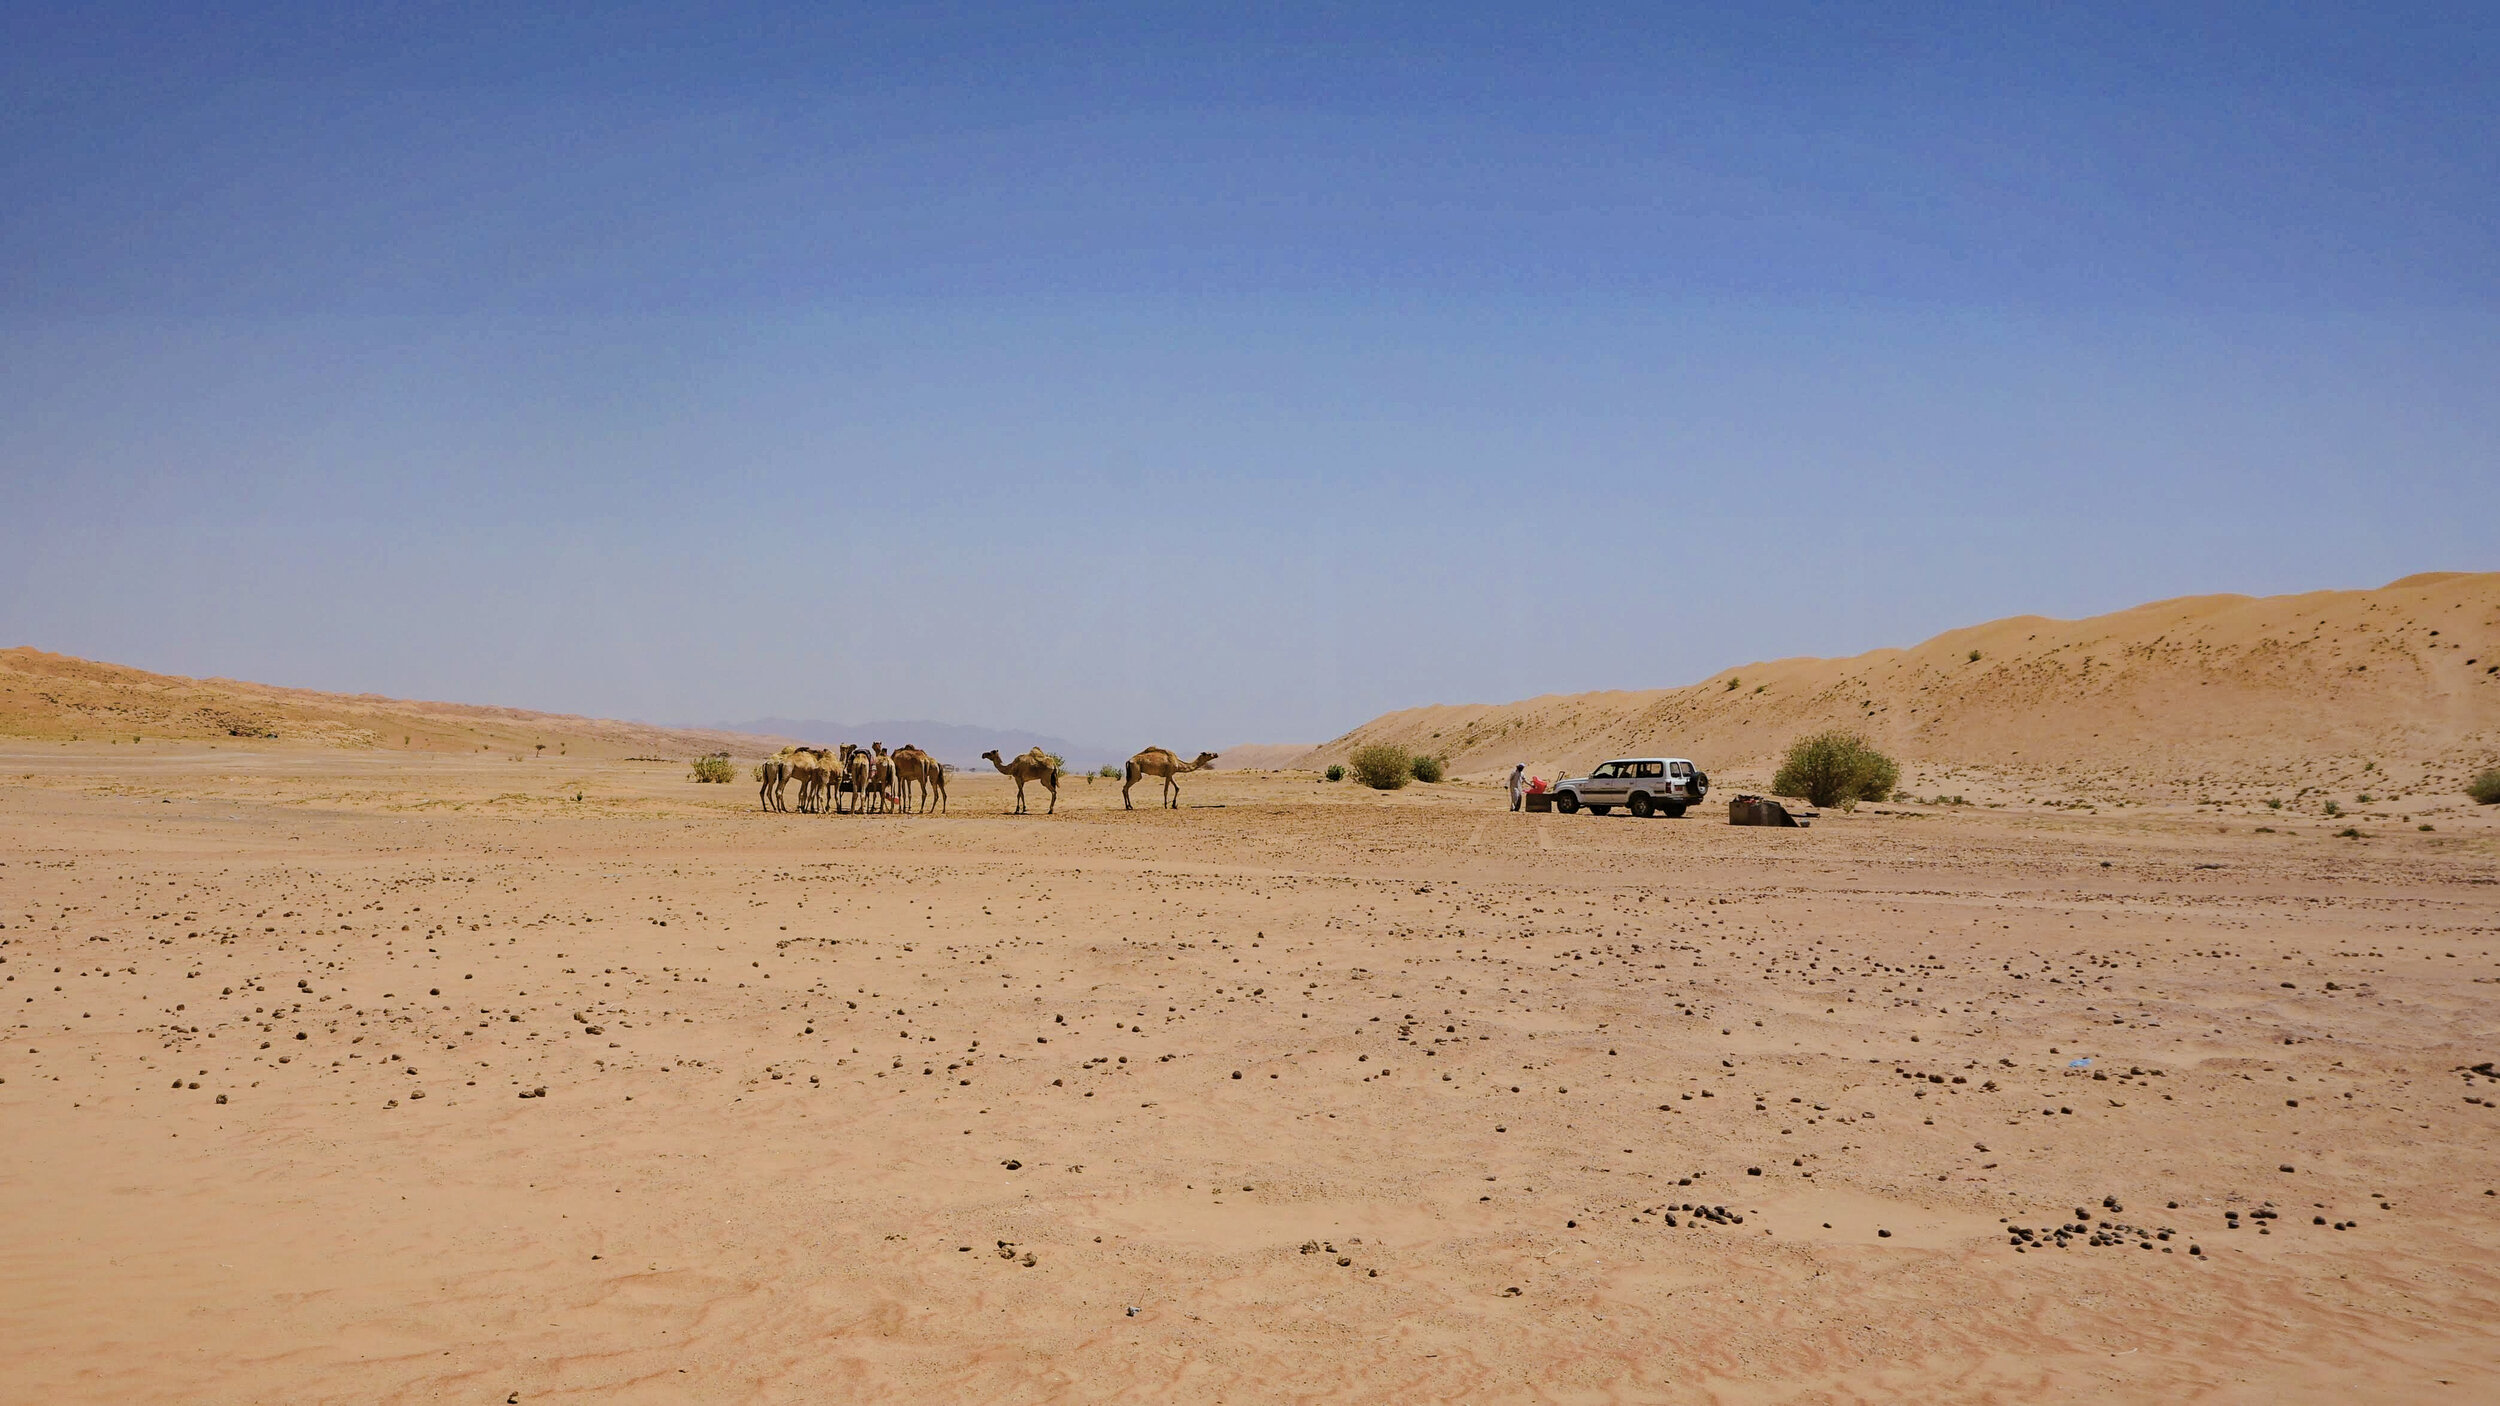 Camel-line-up-SUV-Oman-Wahiba-Sharqiya-Sands-desert.jpg